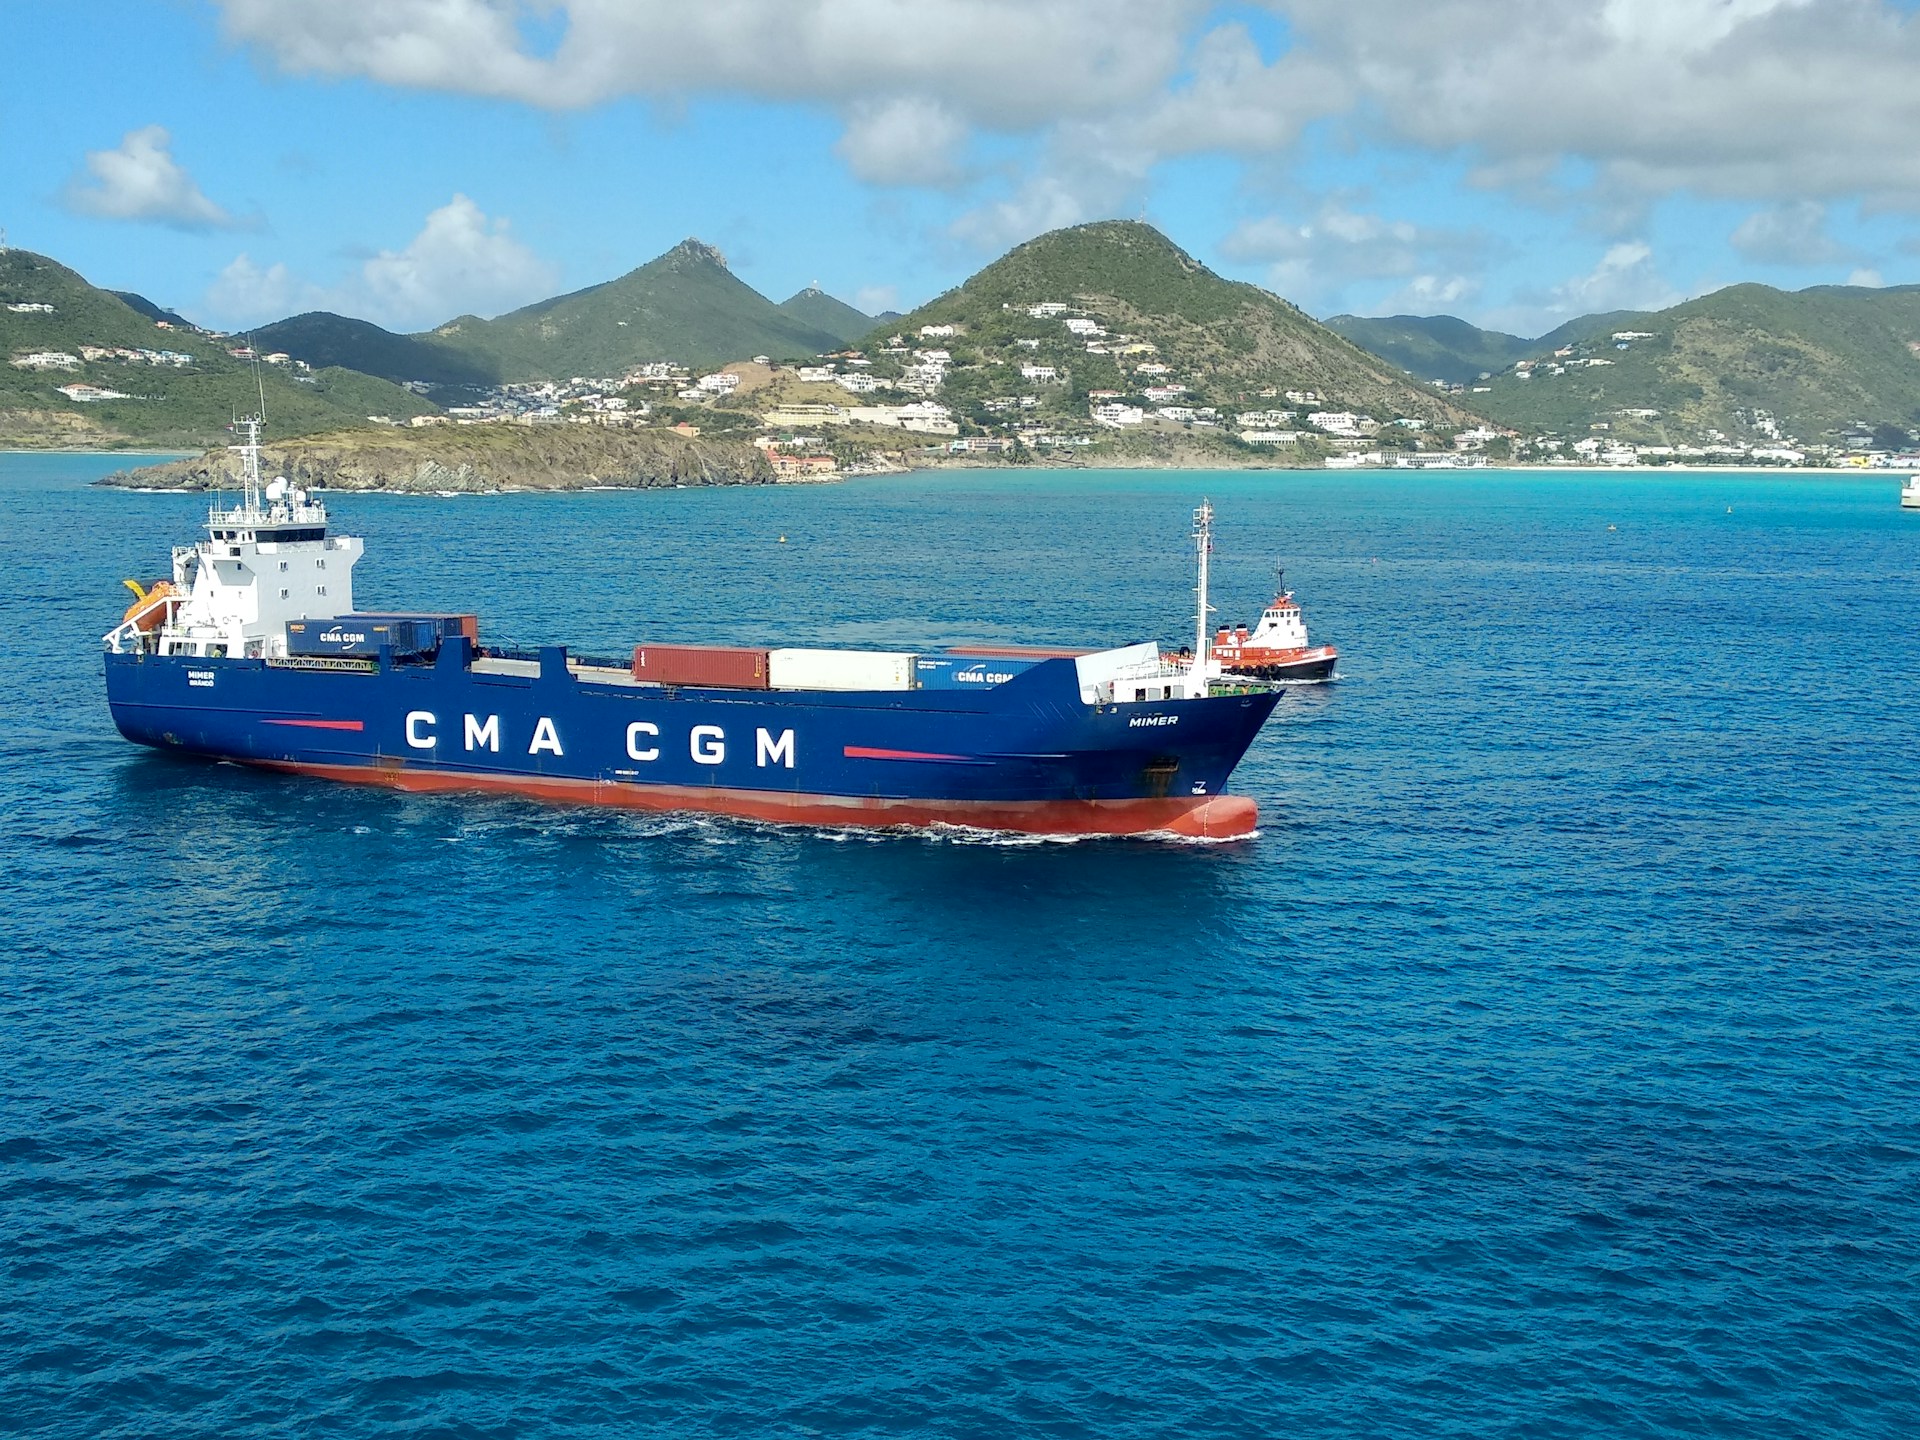 A CMA CGM cargo ship